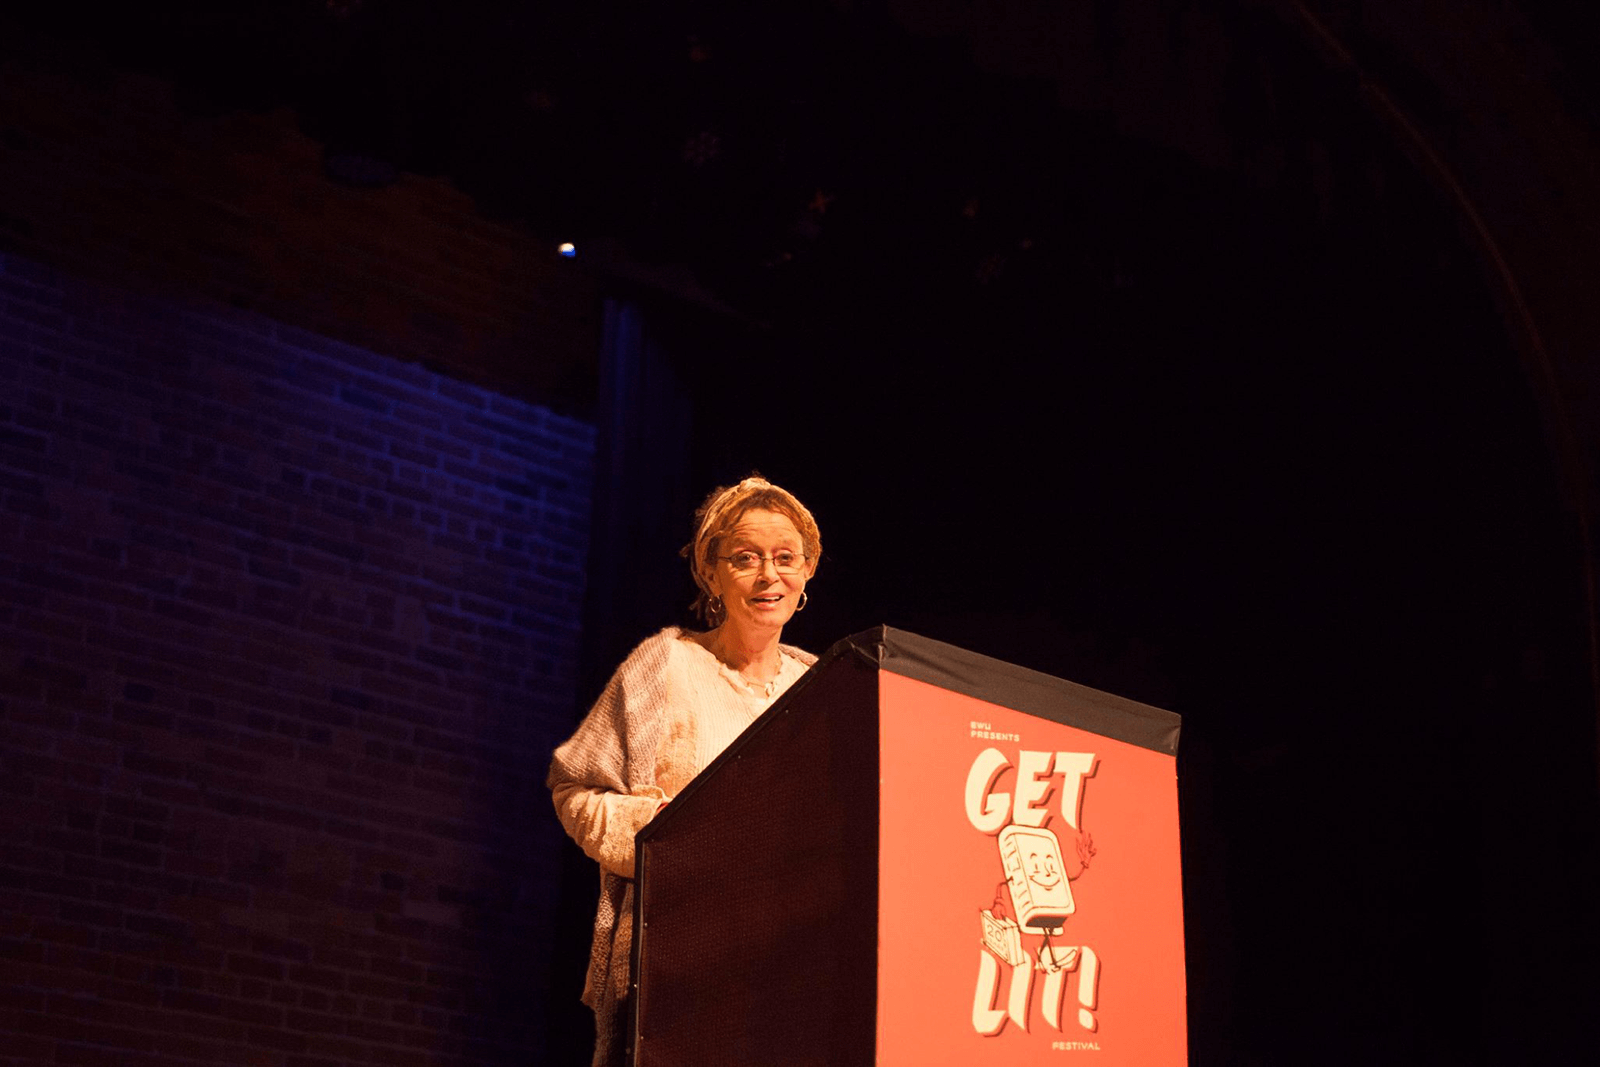 Anne Lamott speaking at Get Lit!